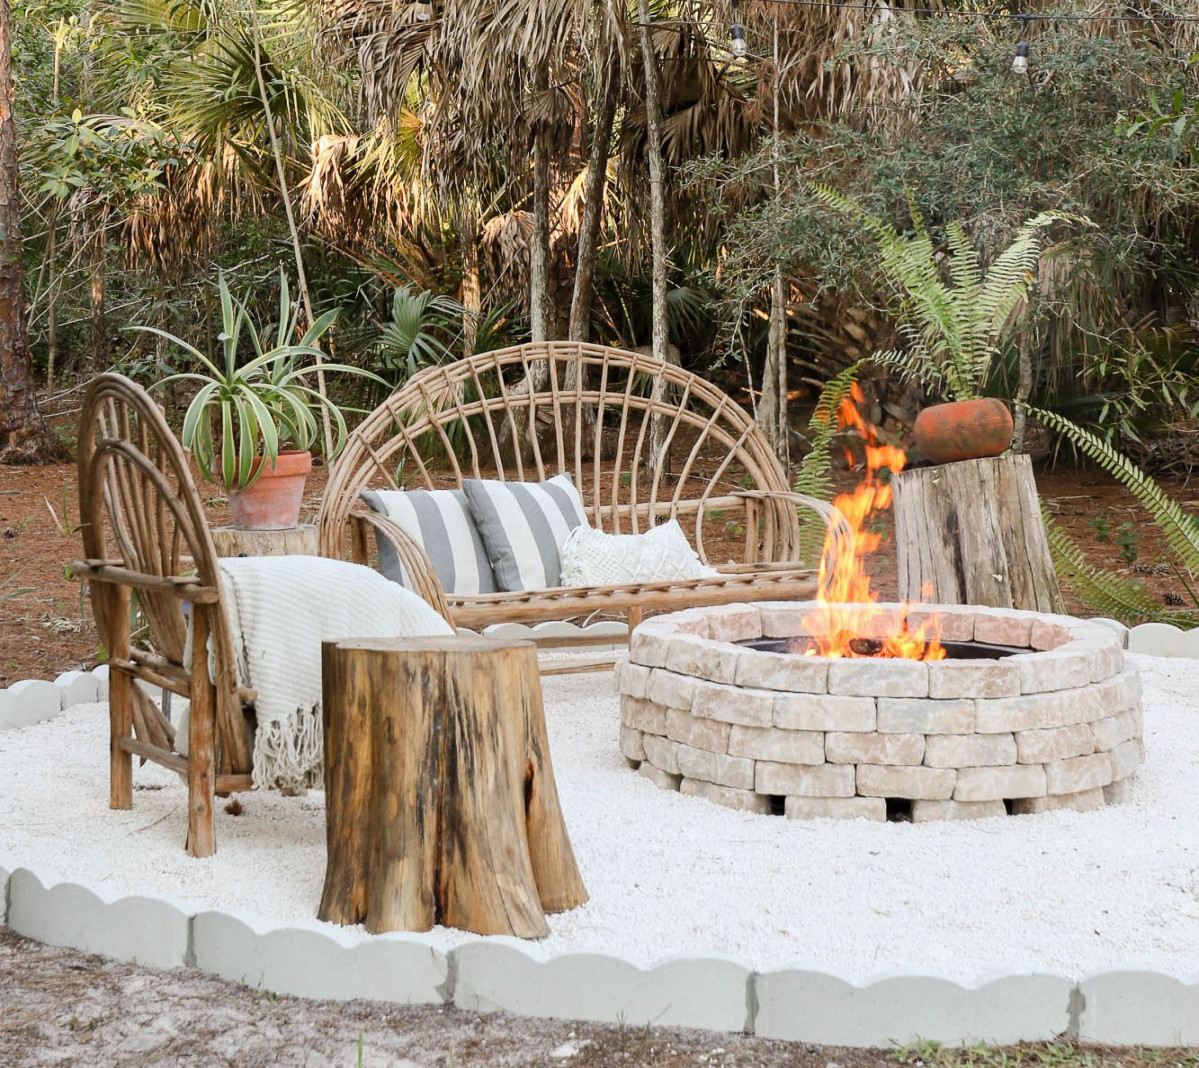 Best Outdoor Fire Pit Ideas - DIY Backyard Fire Pit Ideas